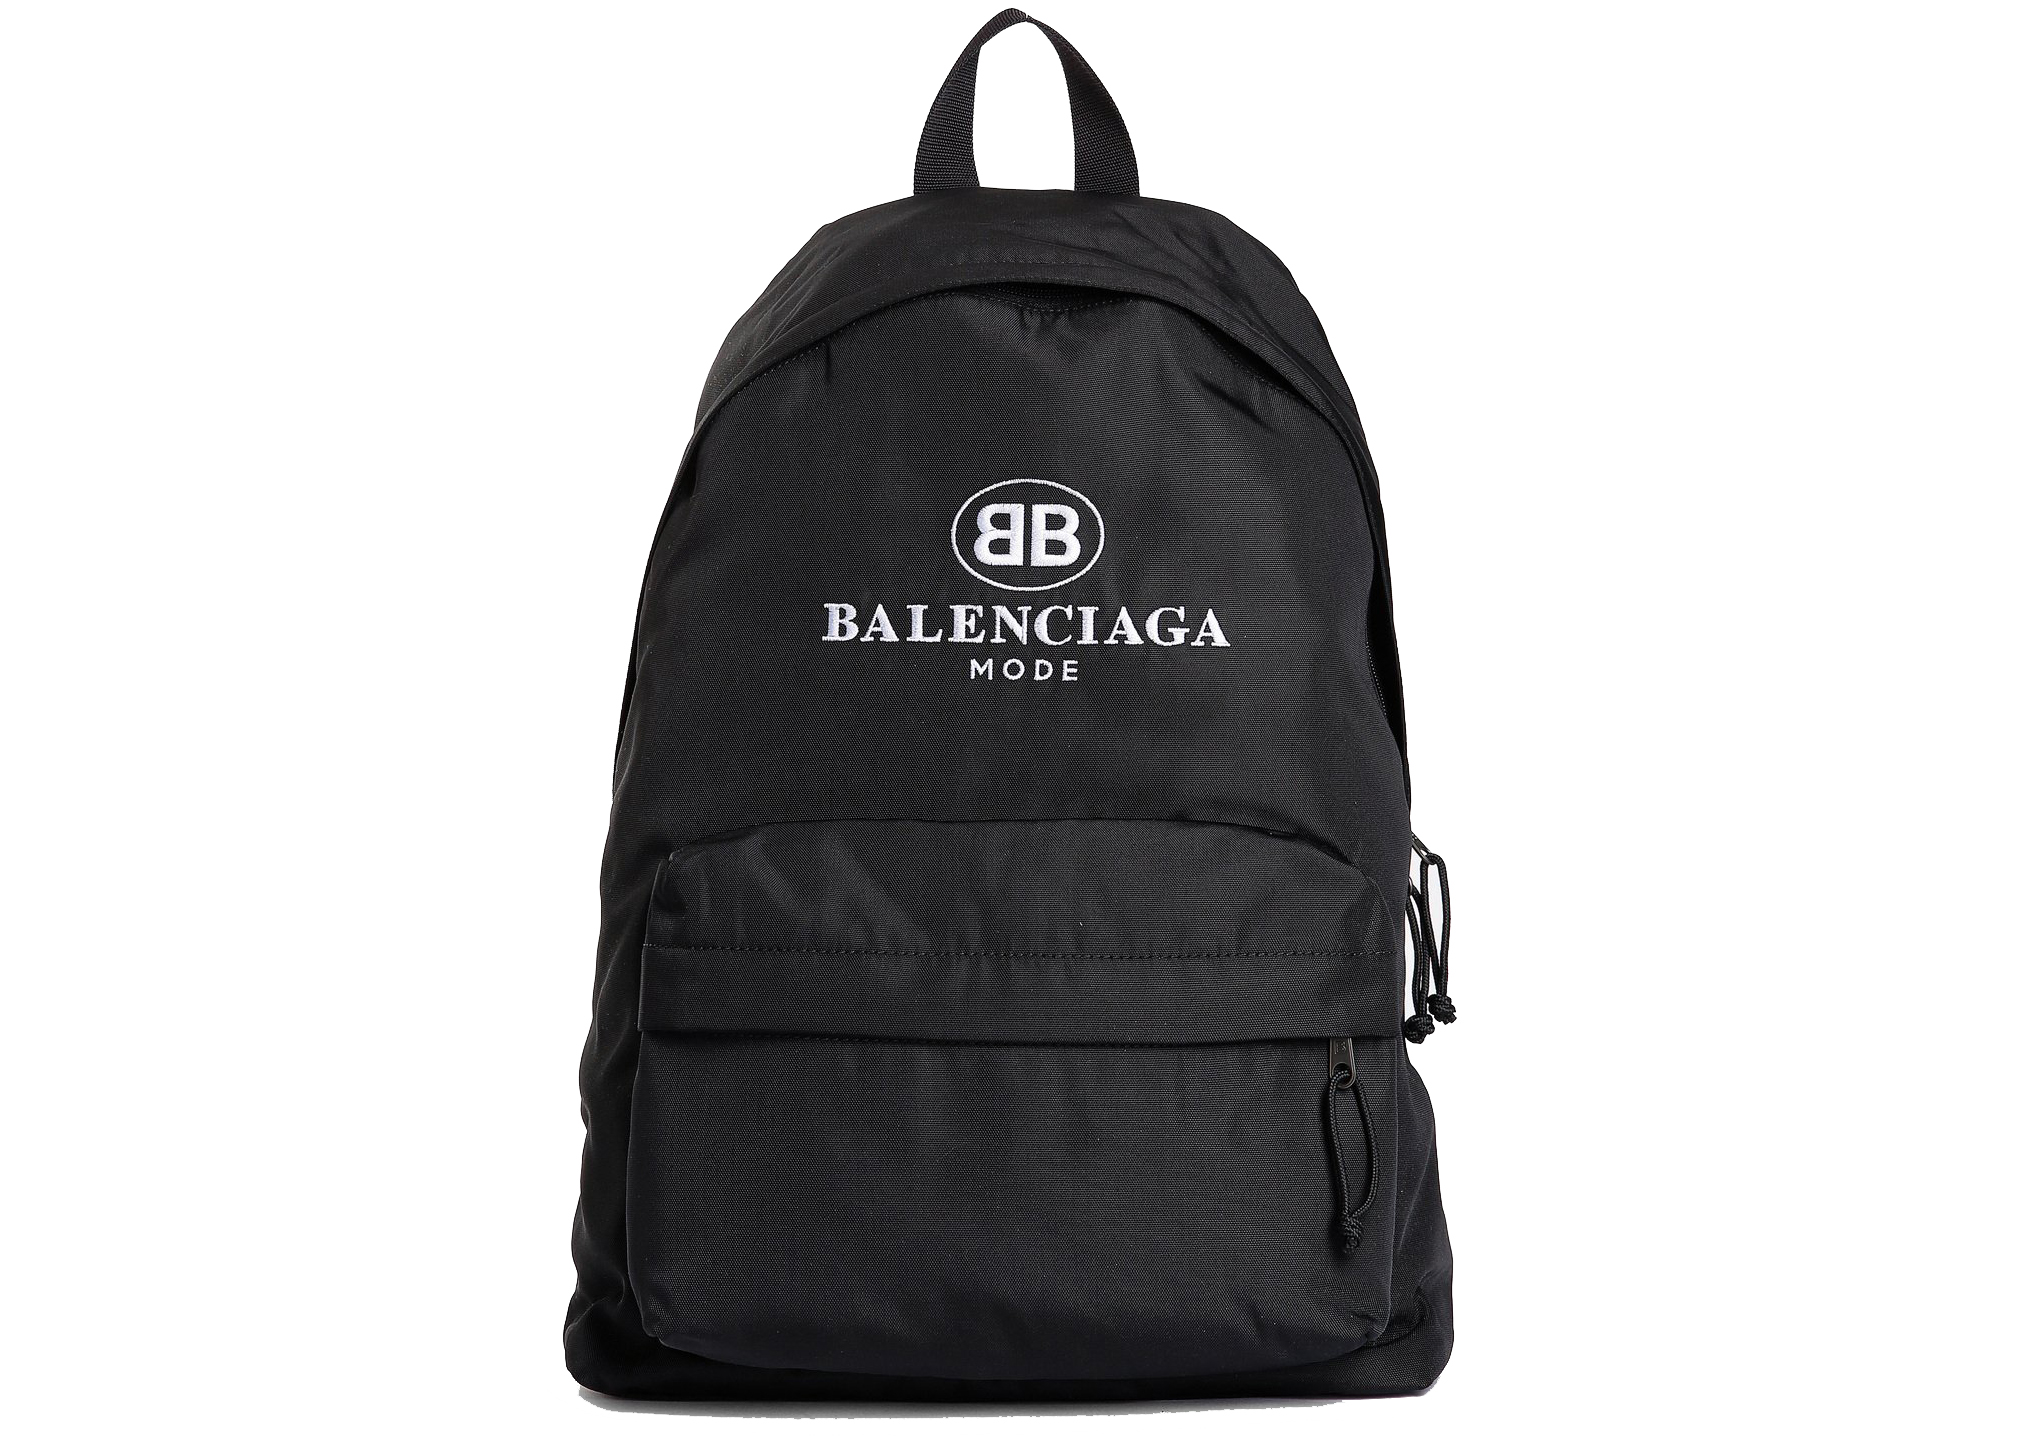 Pre-owned Balenciaga  Mode Backpack Black